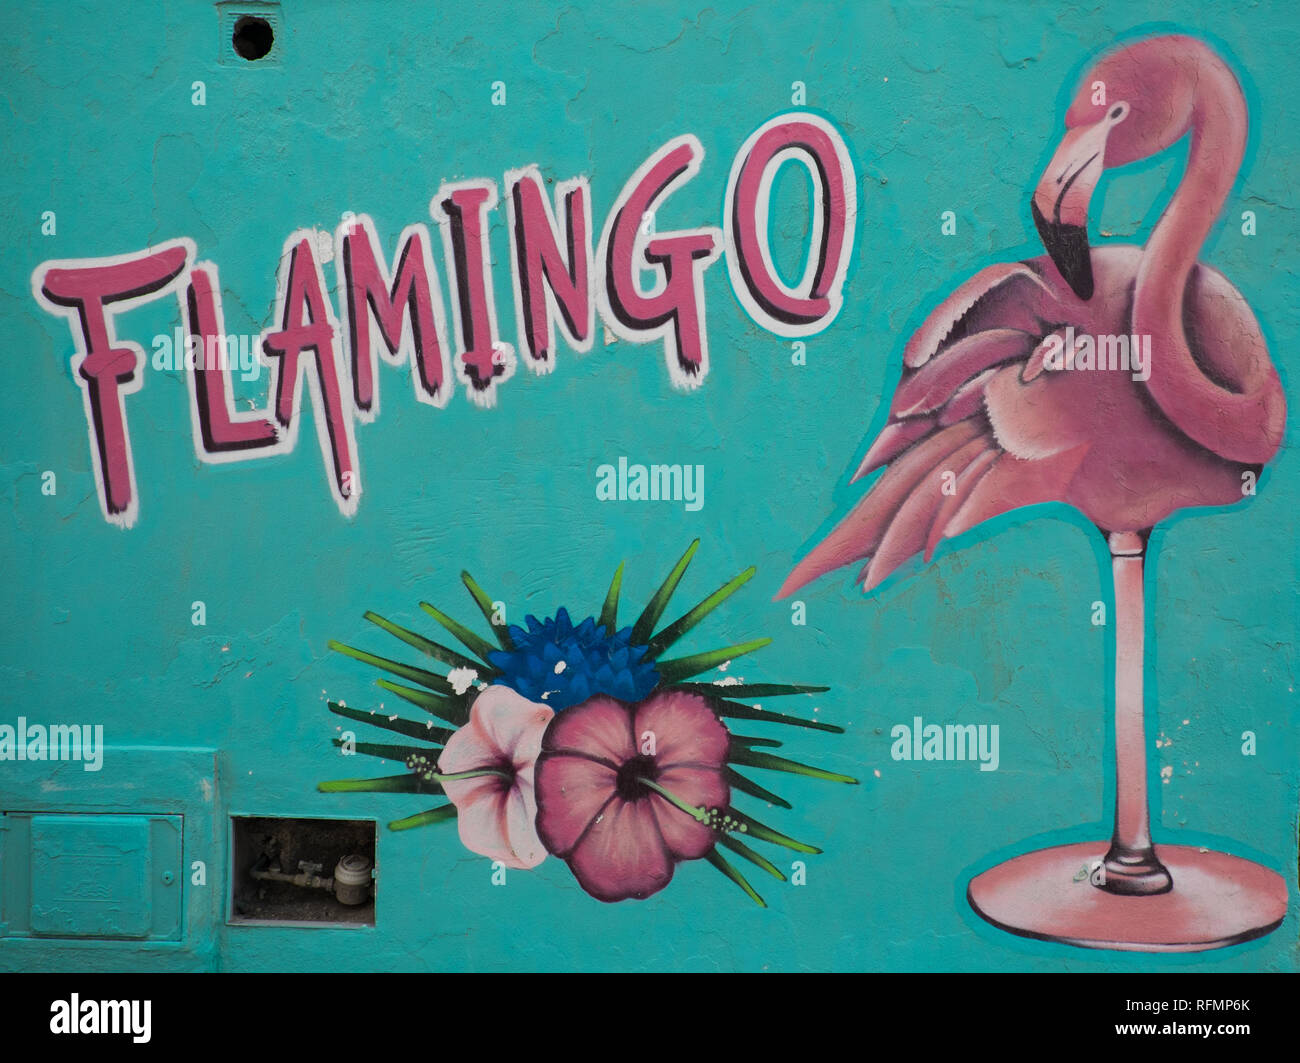 Flamingo bar hi-res stock photography and images - Alamy